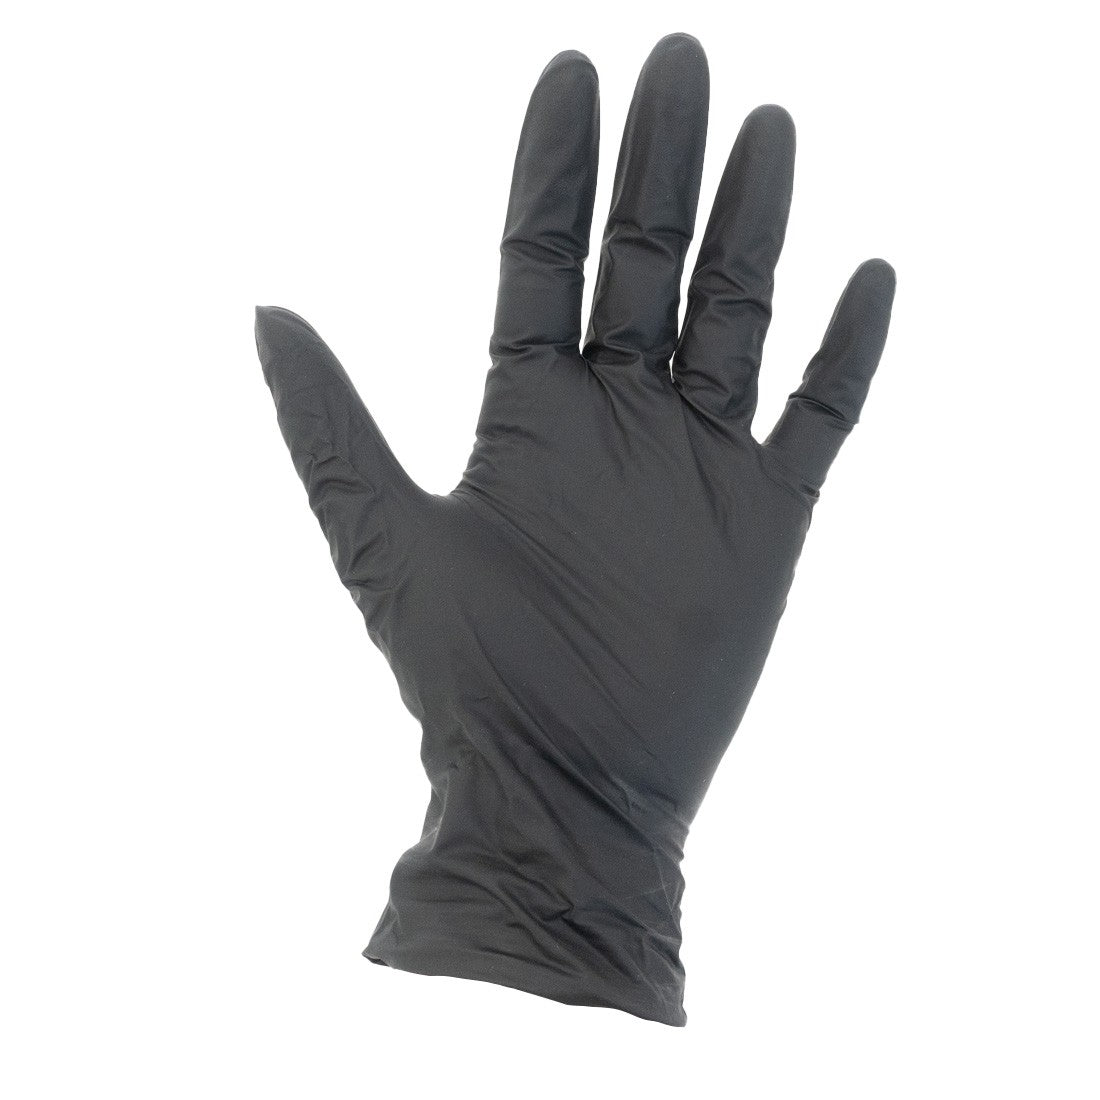 Tronex 9047 Nitrile Powder-Free Black Exam Glove Palm View